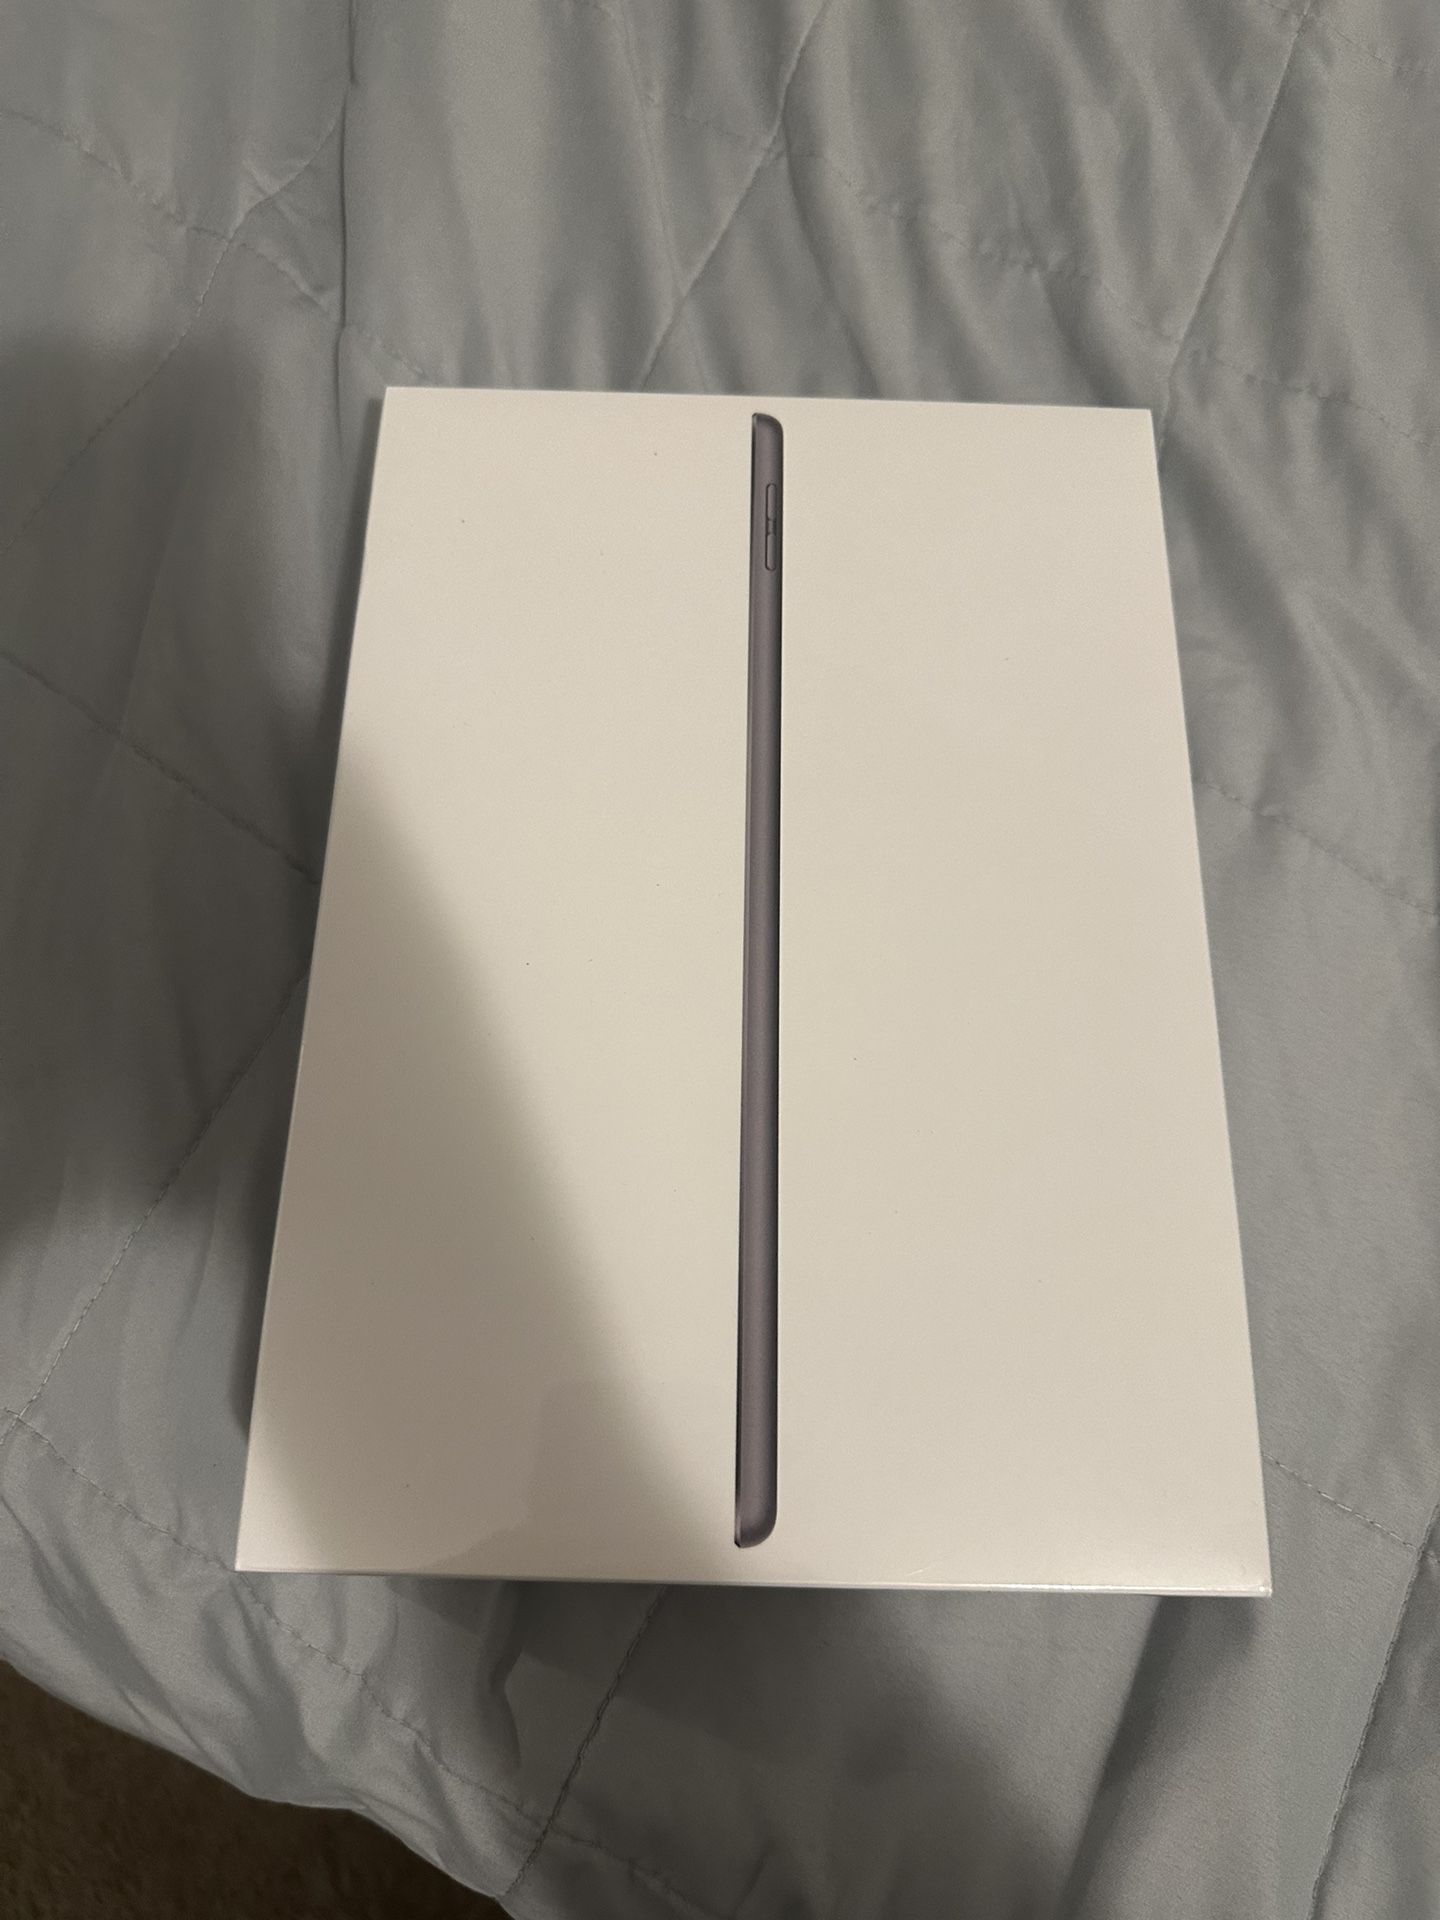 iPad 9th gen - 64 GB - Space gray